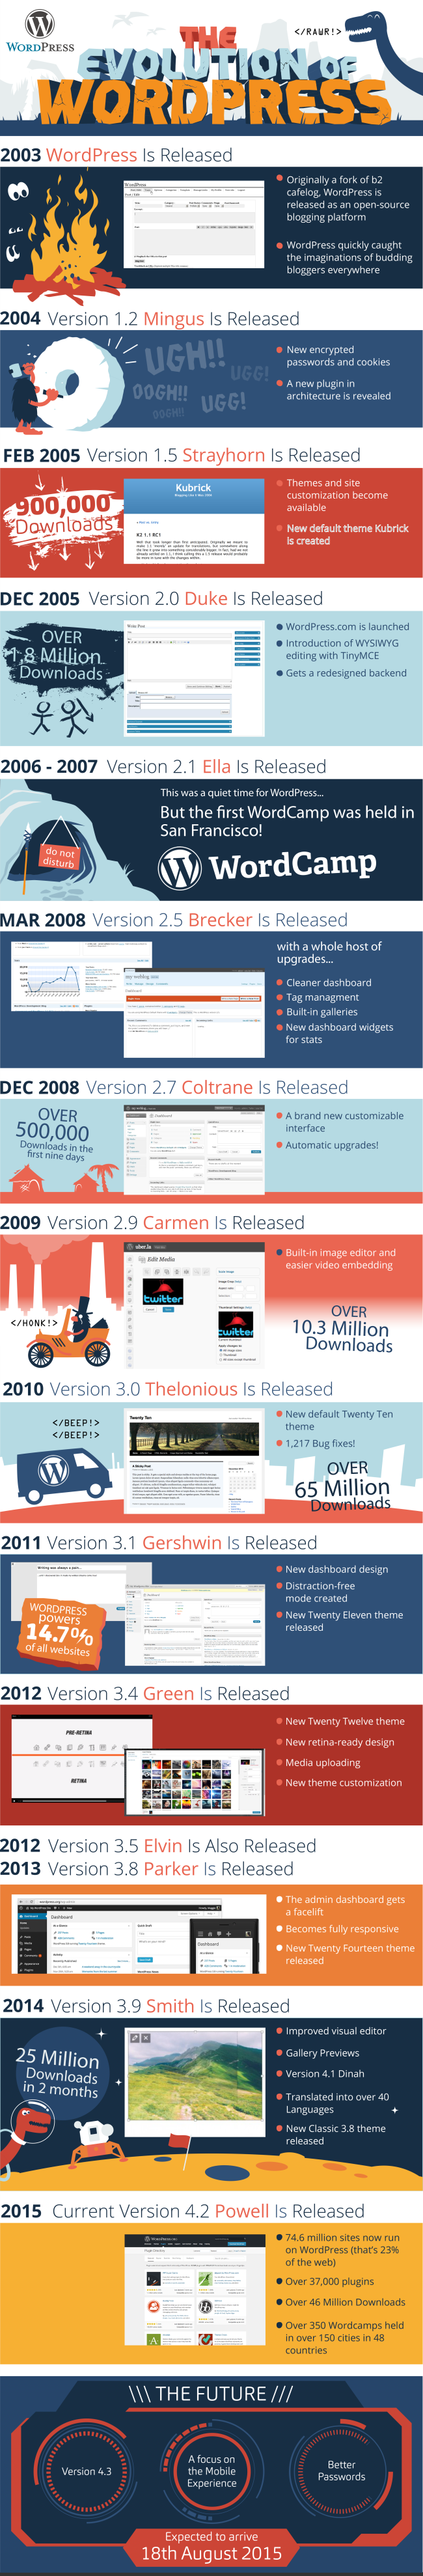 The Evolution of WordPress